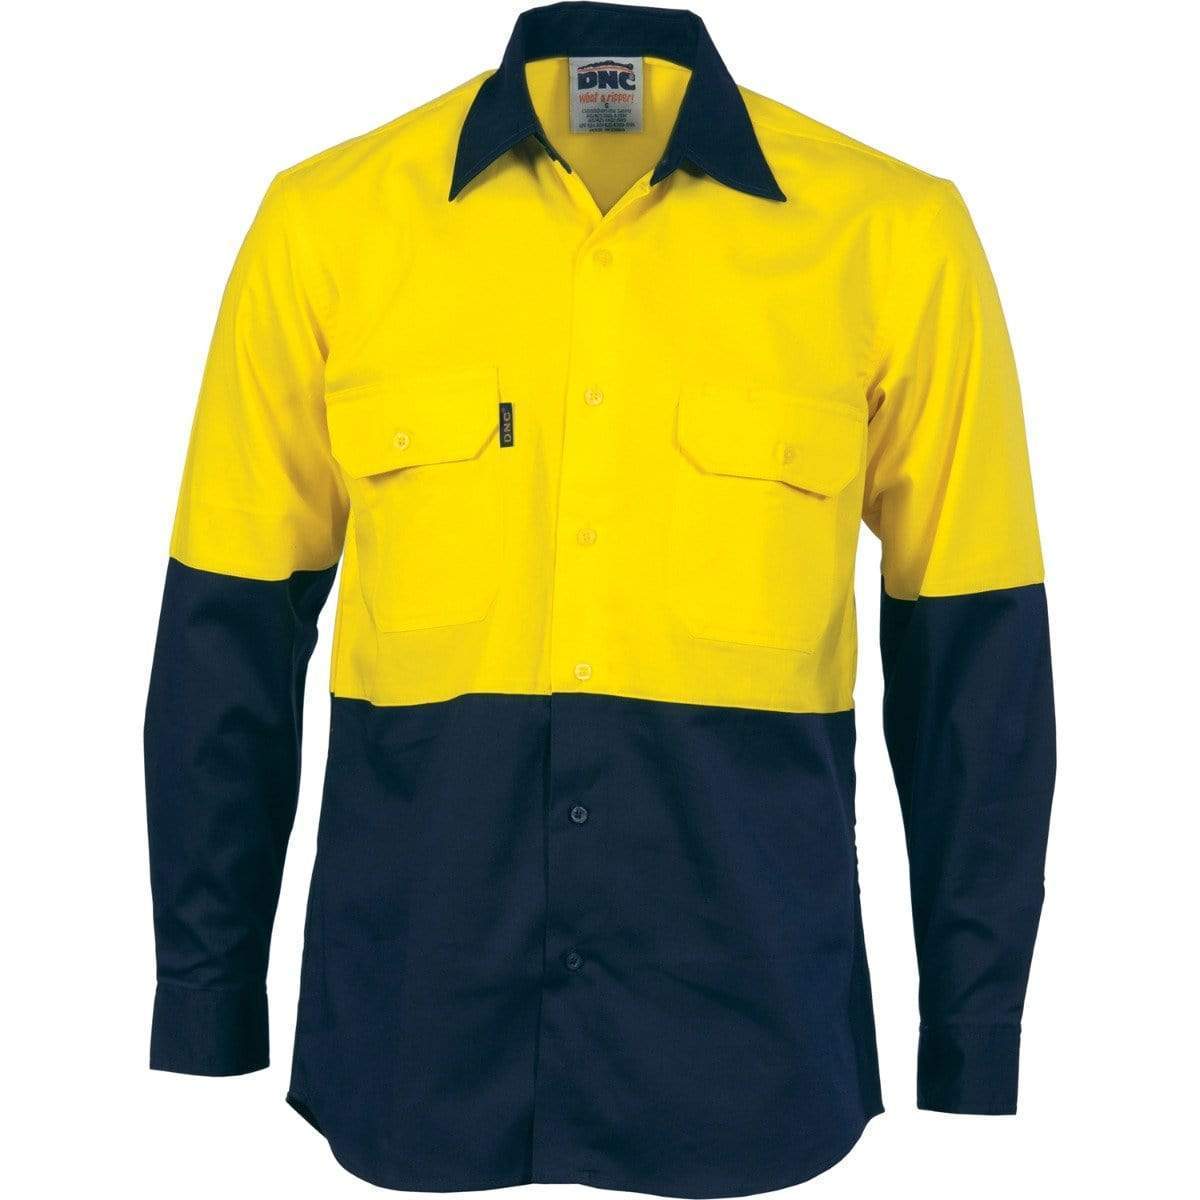 Dnc Workwear Hi-vis Cool-breeze Vertical Vented Long Sleeve Cotton Shirt - 3732 Work Wear DNC Workwear Yellow/Navy XS 